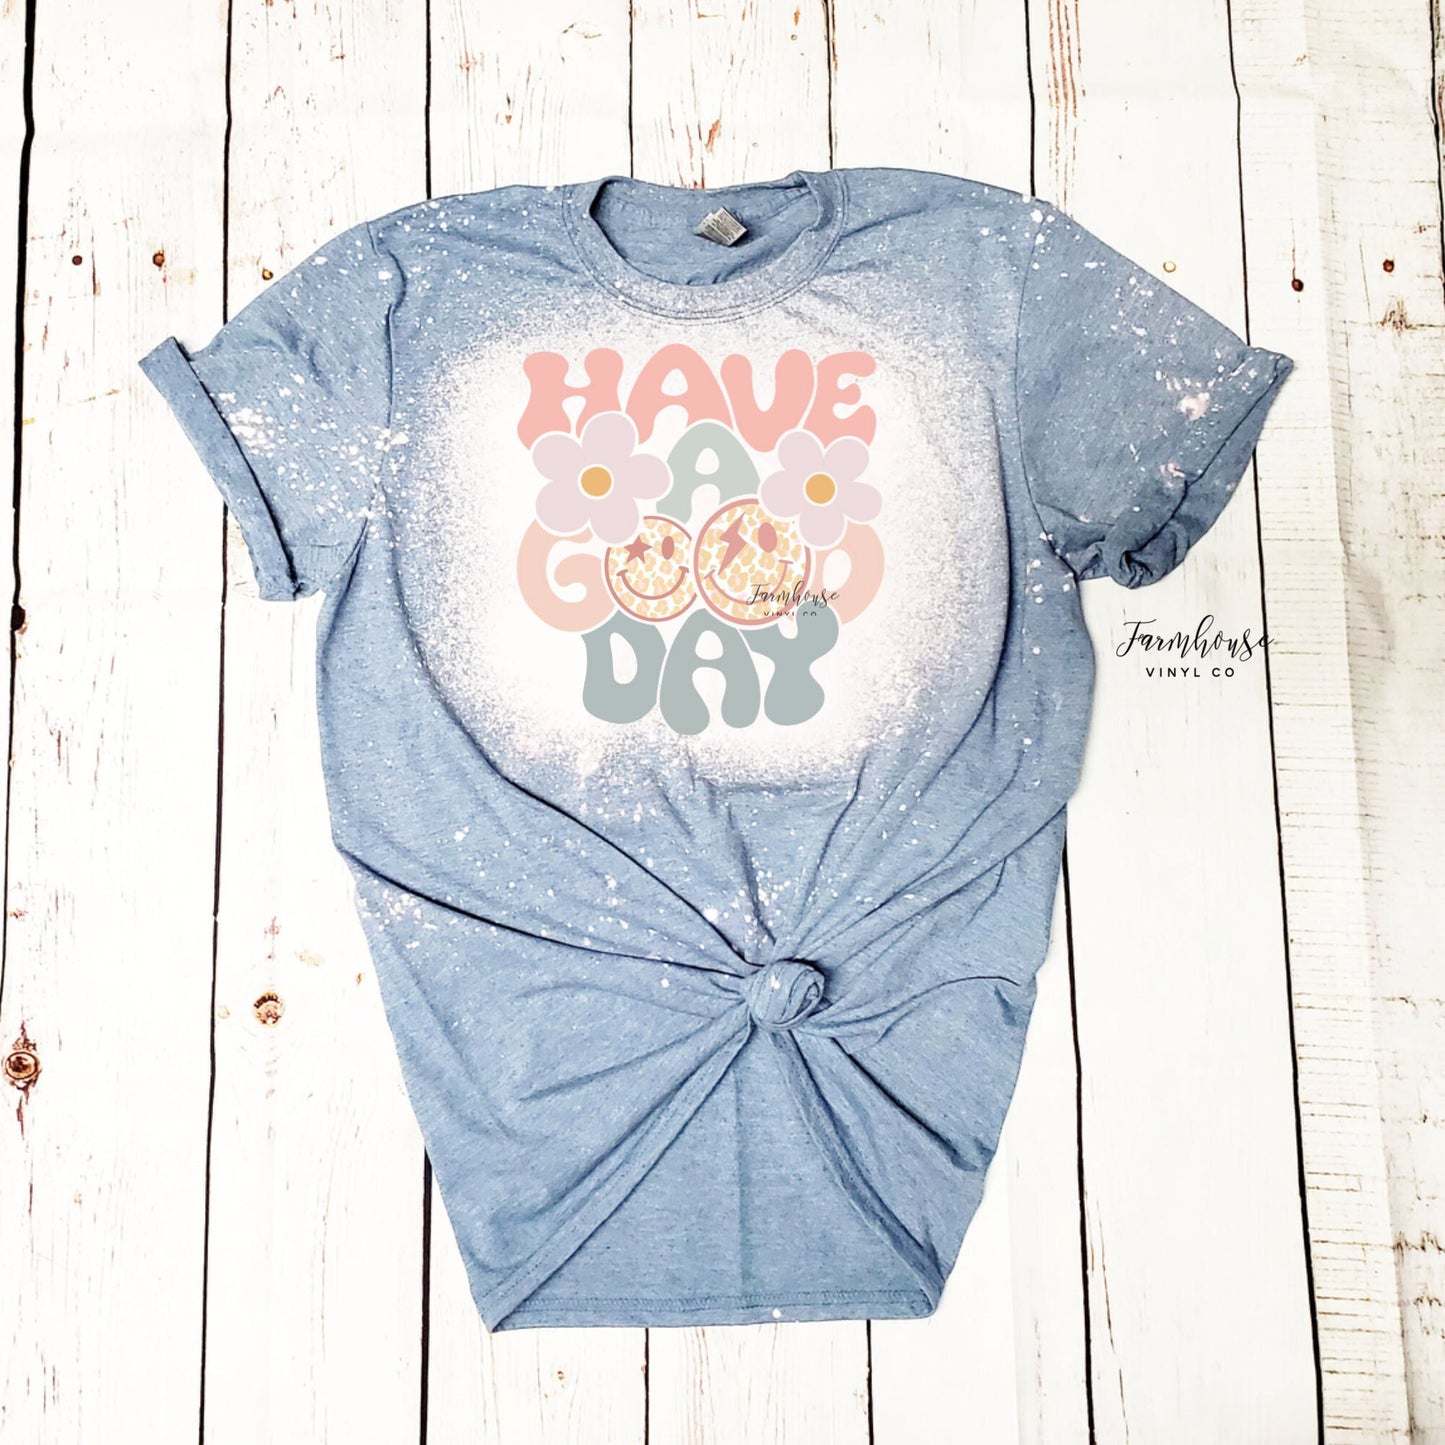 Have A Good Day Hippie Retro Font Tee Shirt / Positive Quote Sweatshirt Tee / Floral  Shirt / Hippie Tie Dye / Trendy Retro T Shirt - Farmhouse Vinyl Co